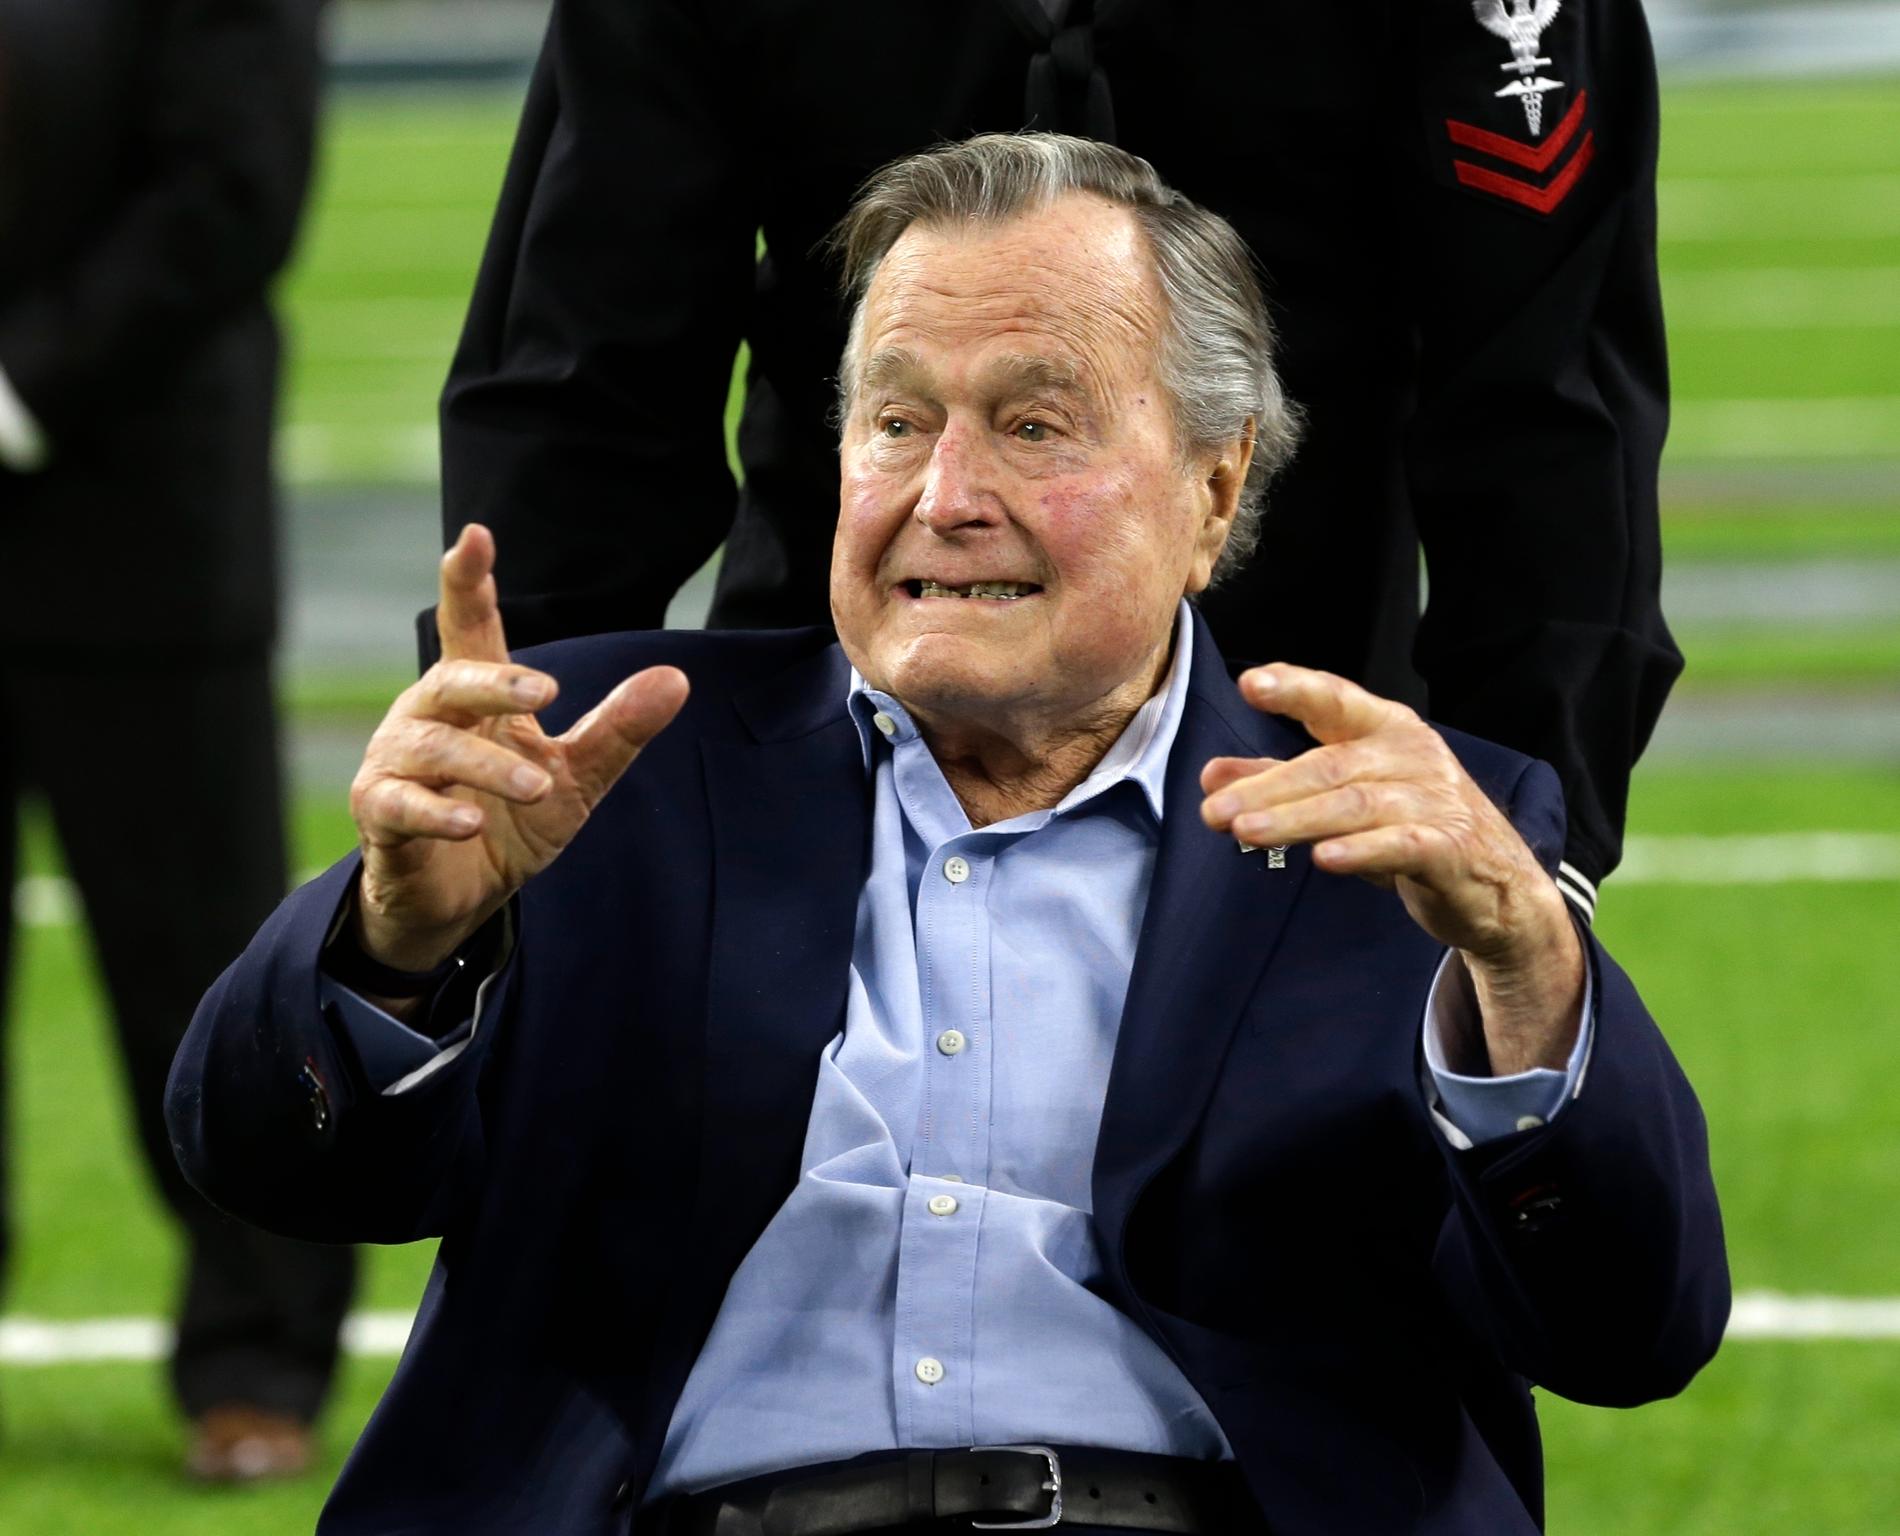 George H.W. Bush vid Super Bowl finalen februari 2017.